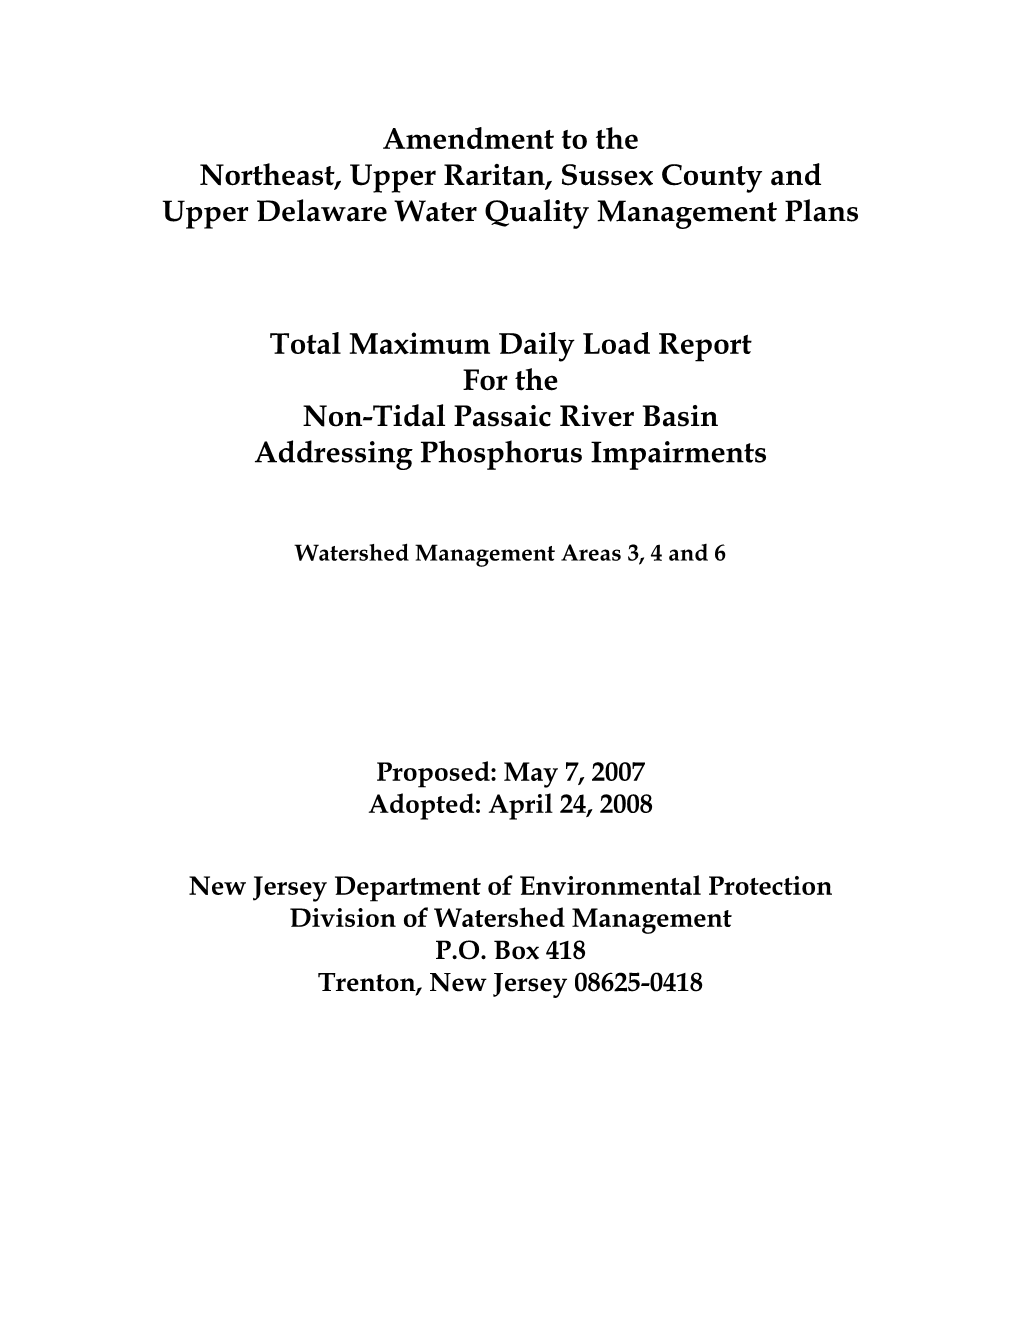 Total Maximum Daily Load Report for the Non-Tidal Passaic River Basin Addressing Phosphorus Impairments